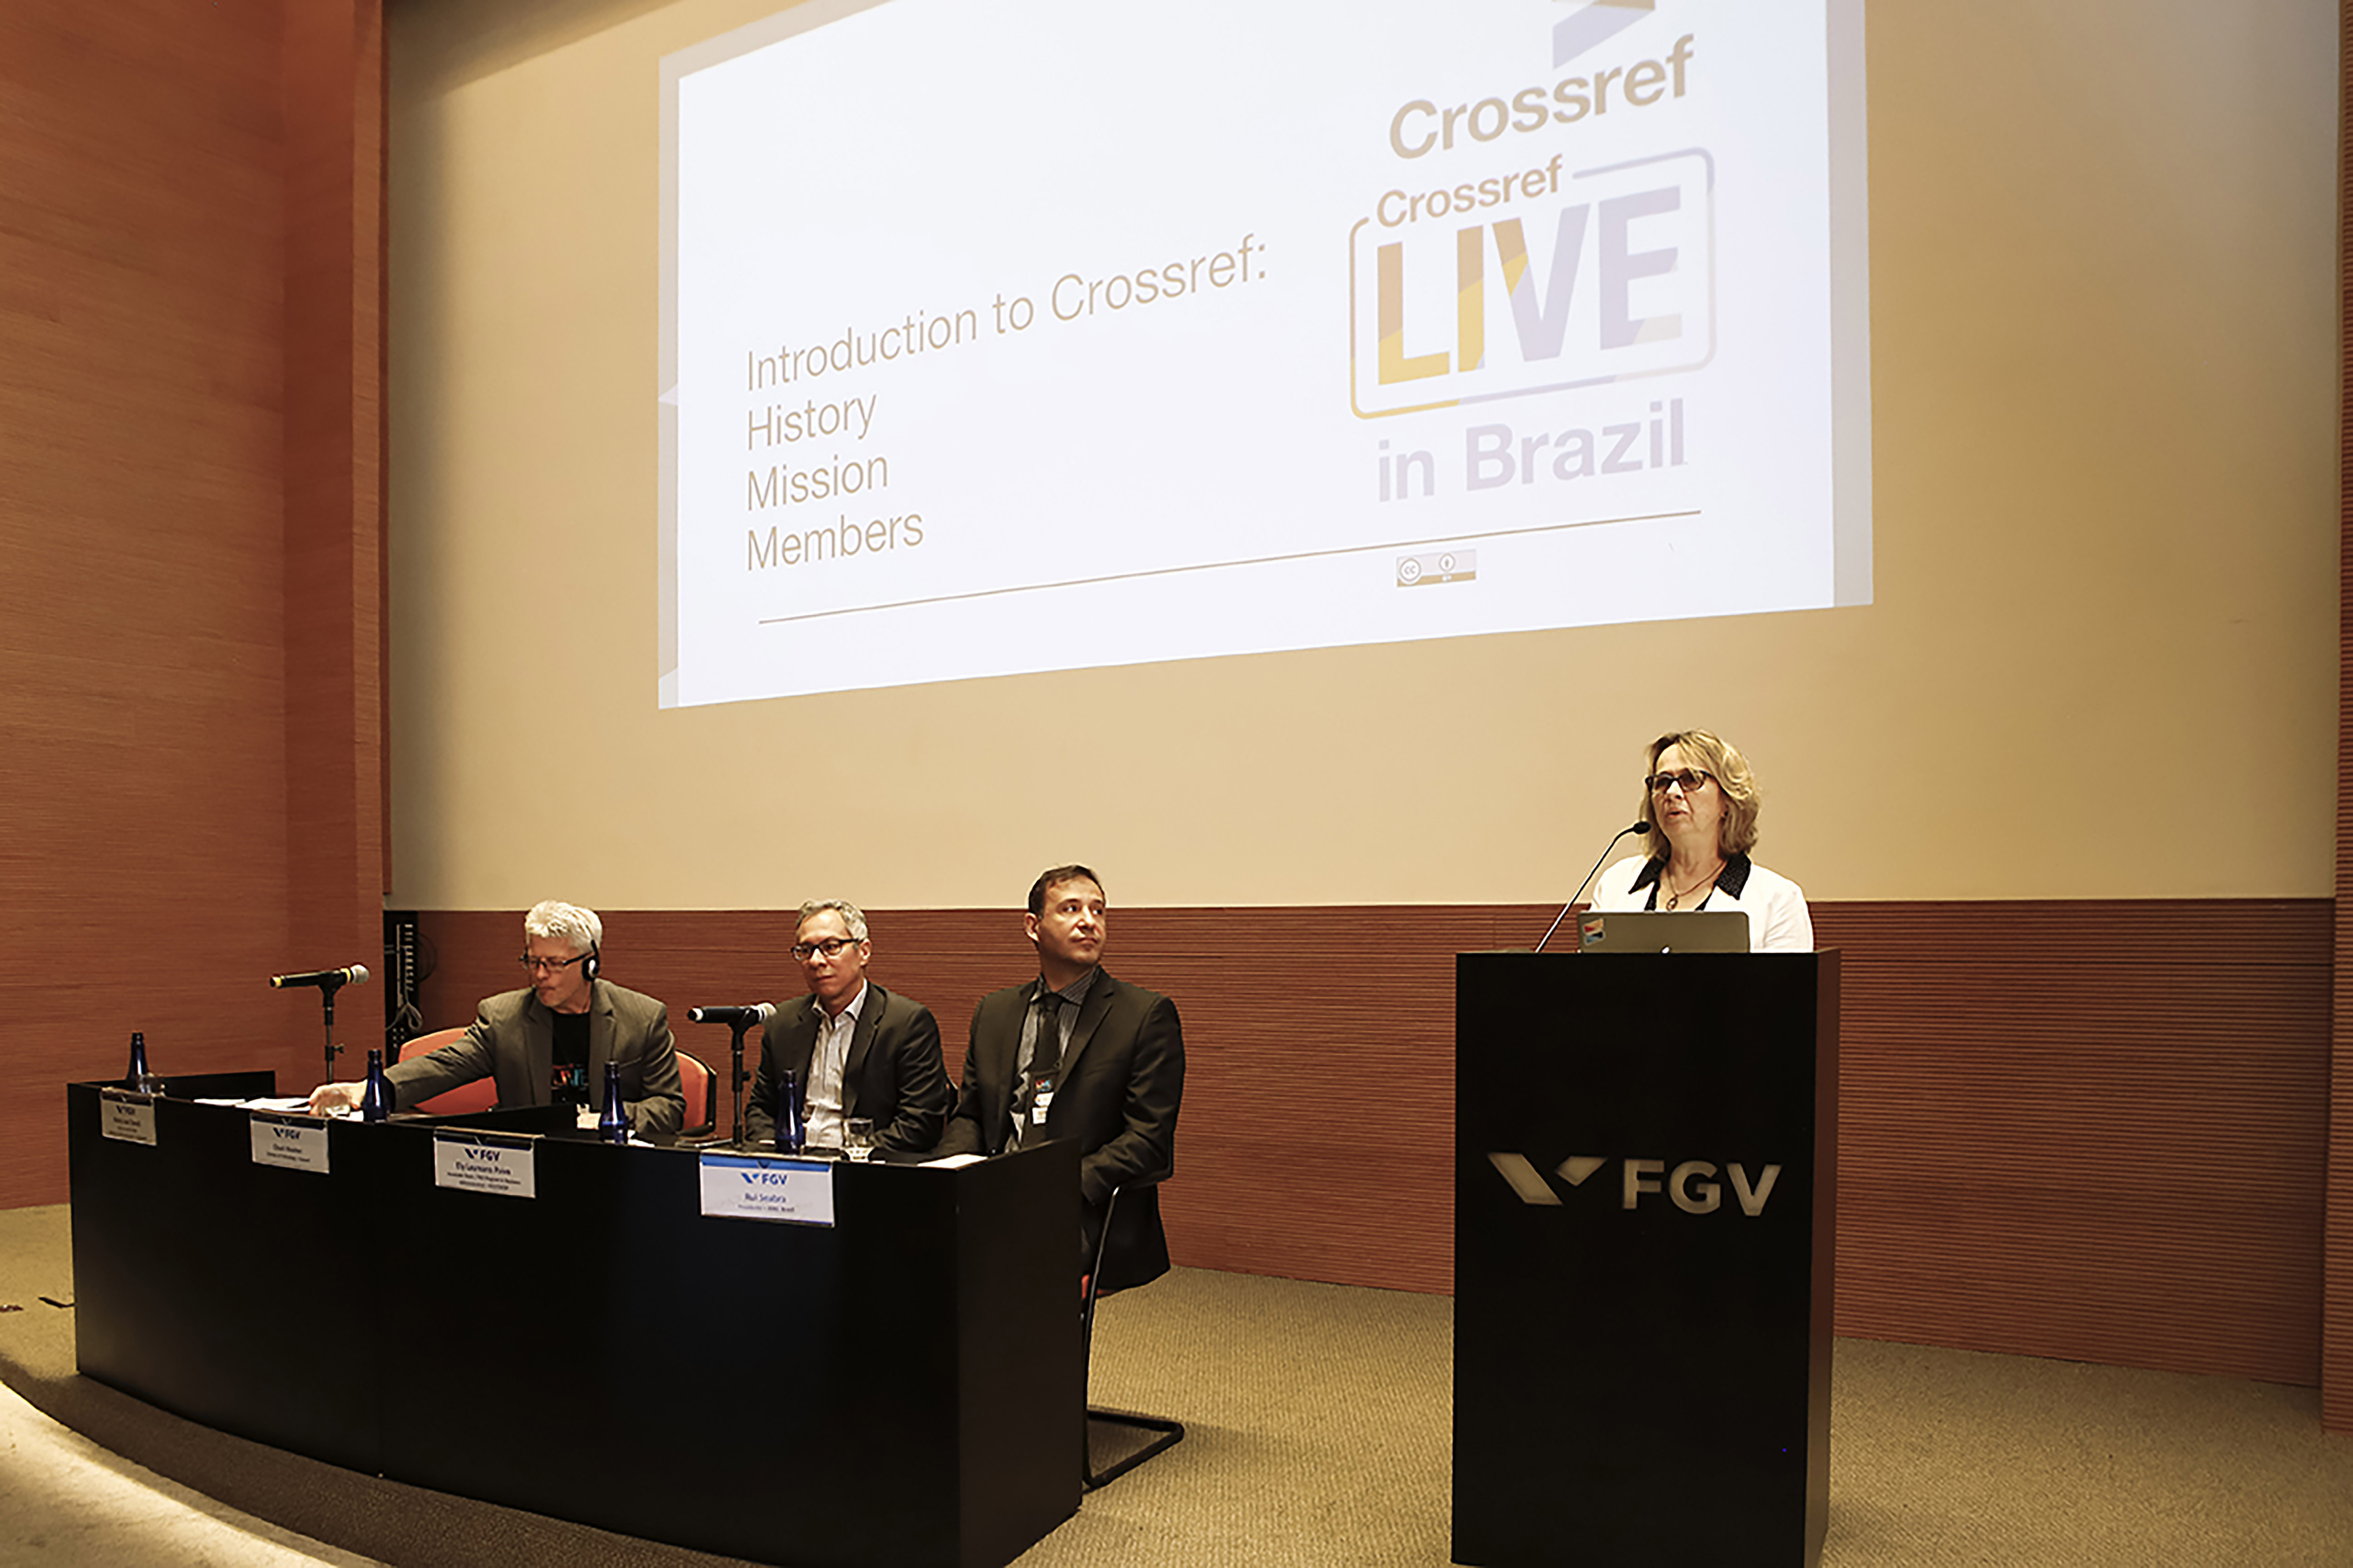 Speakers at Crossref LIVE Brazil